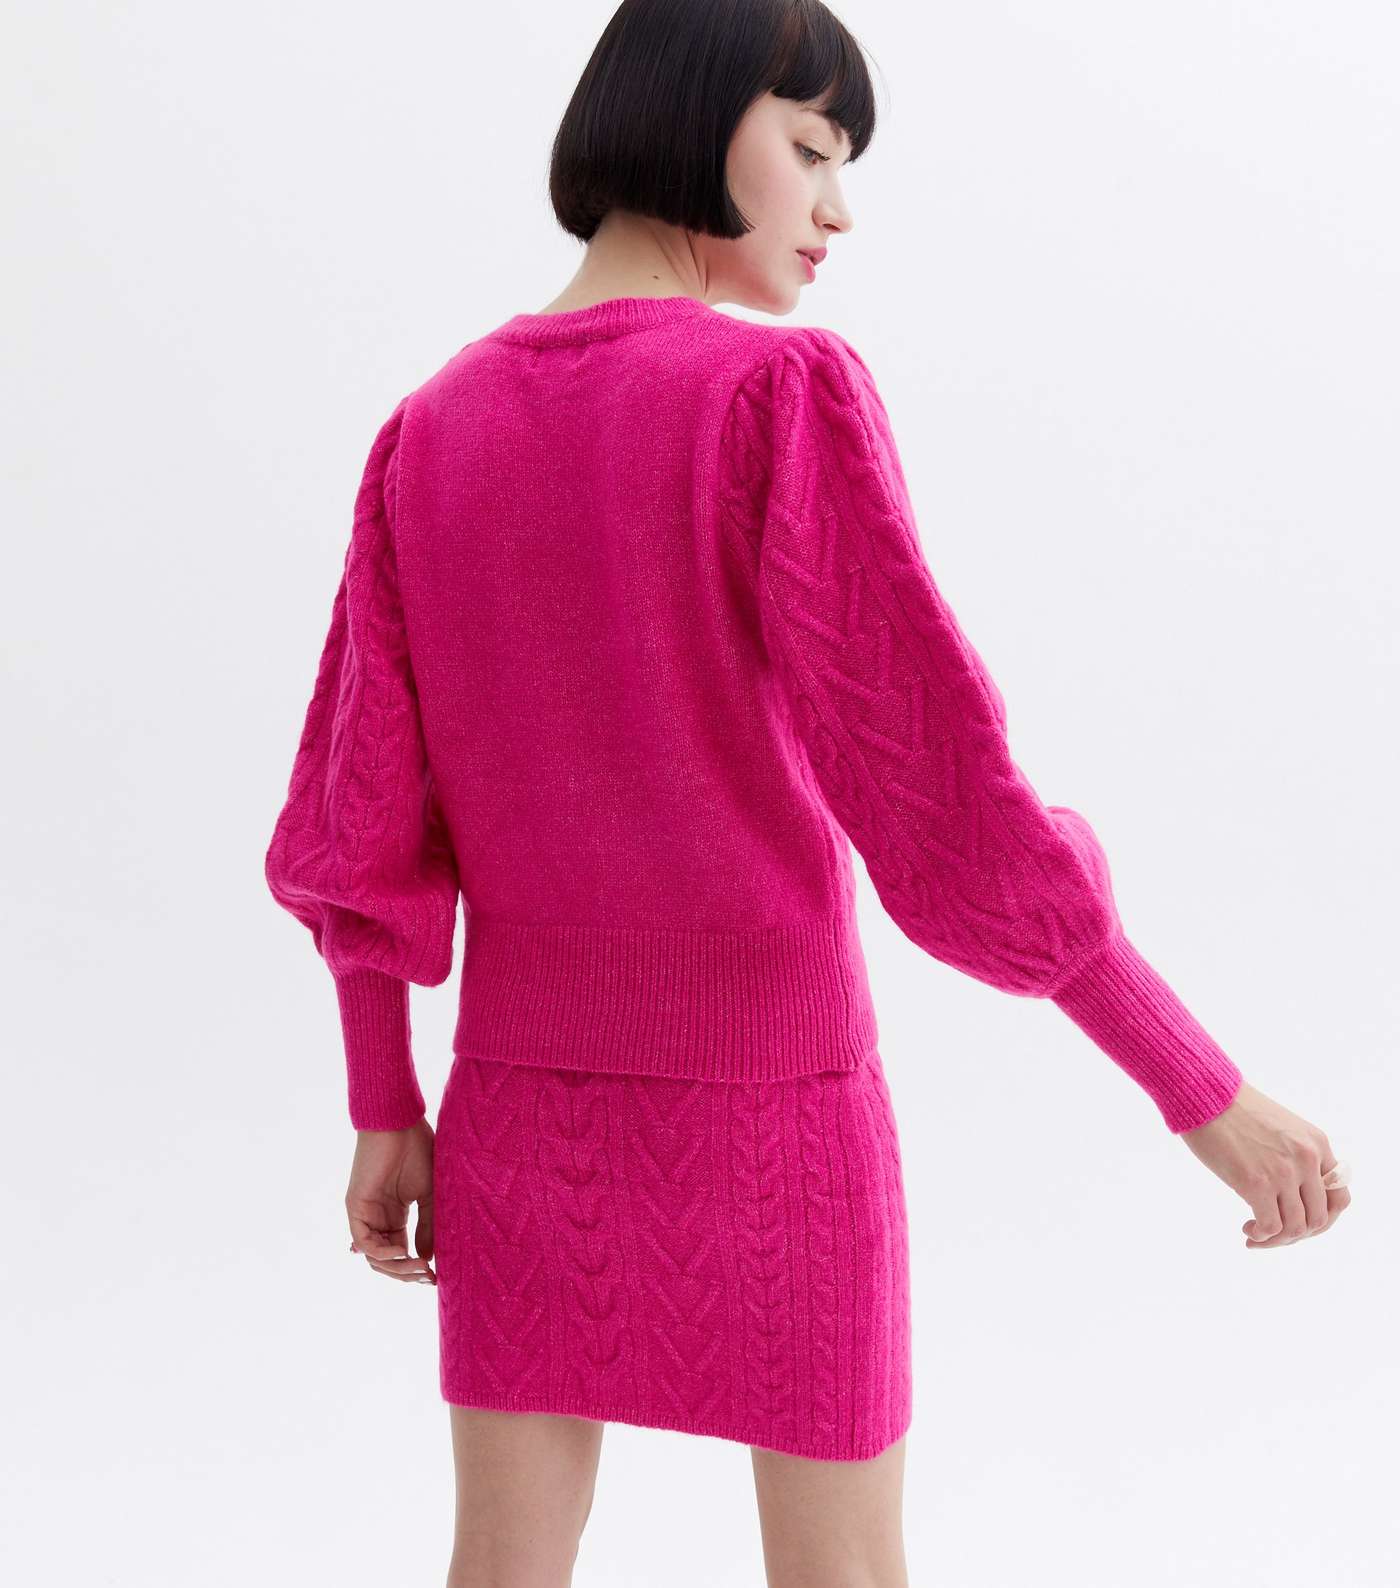 Sunshine Soul Bright Pink Cable Knit Jumper Image 4